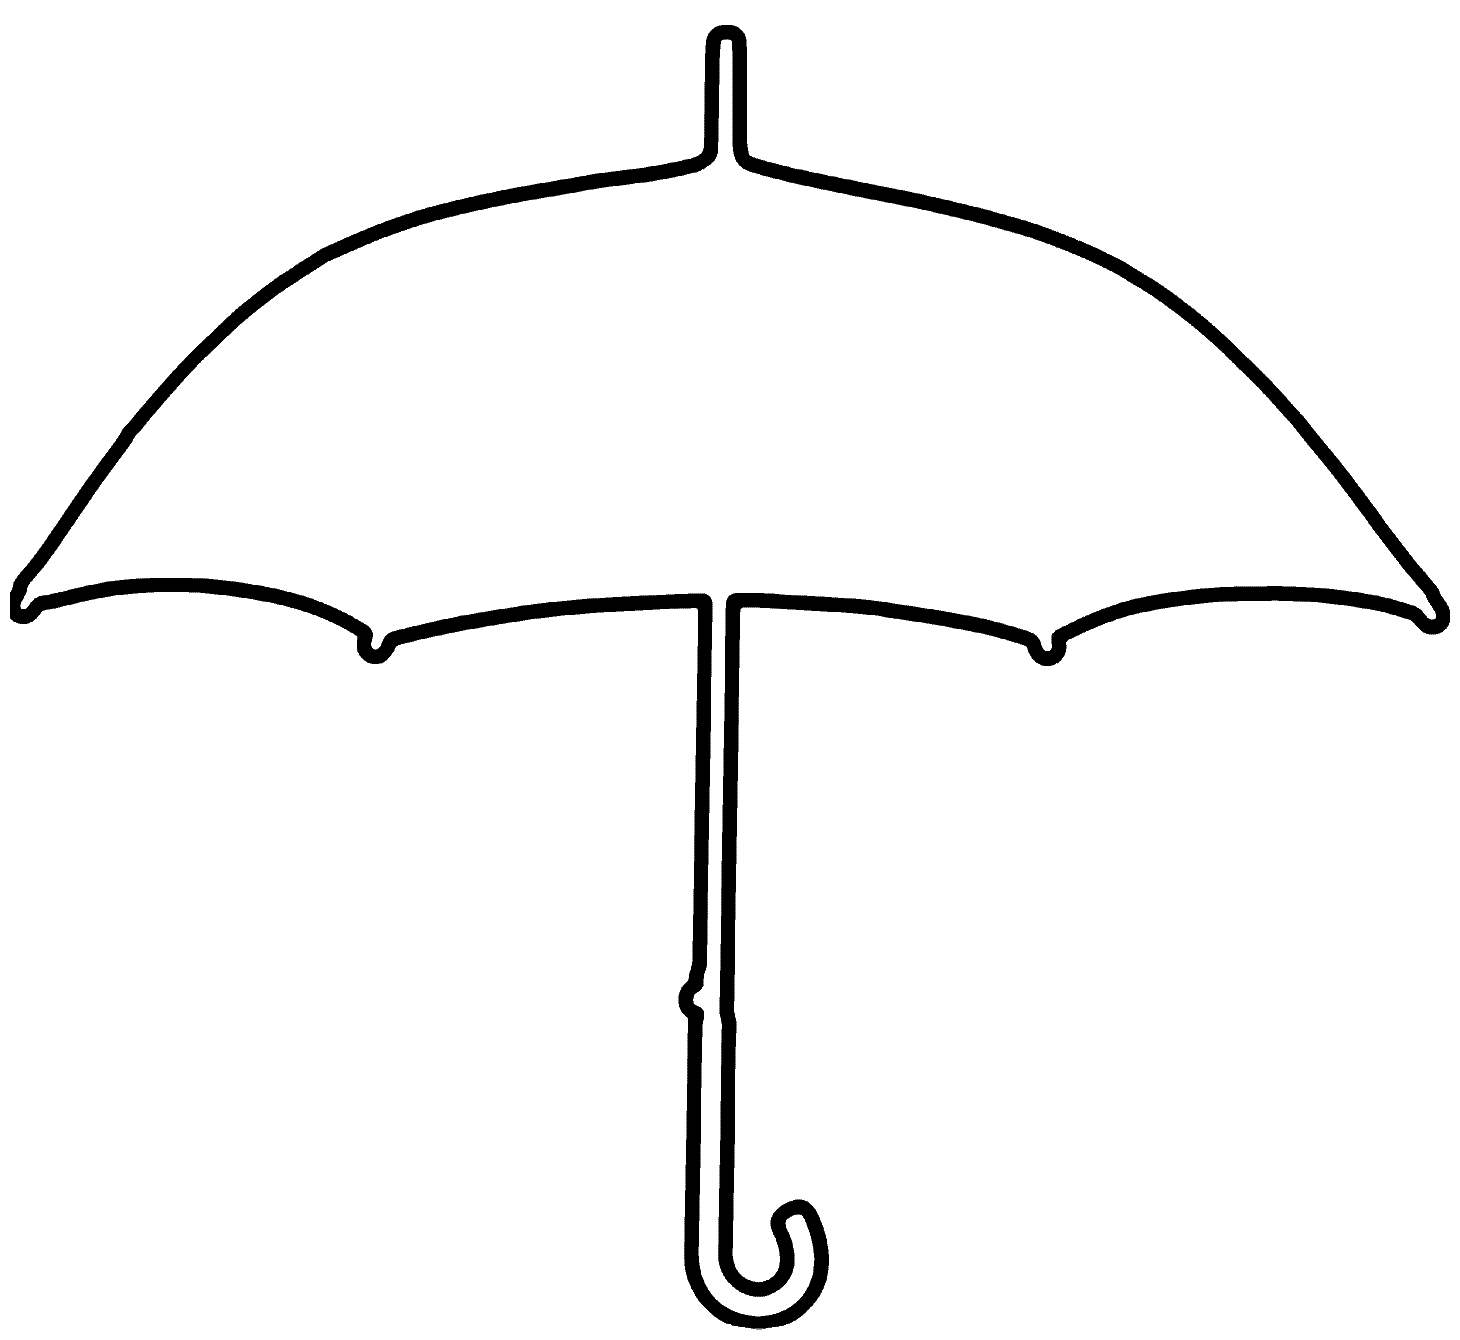 Free Umbrella Template Printable, Download Free Umbrella Template With Regard To Blank Umbrella Template